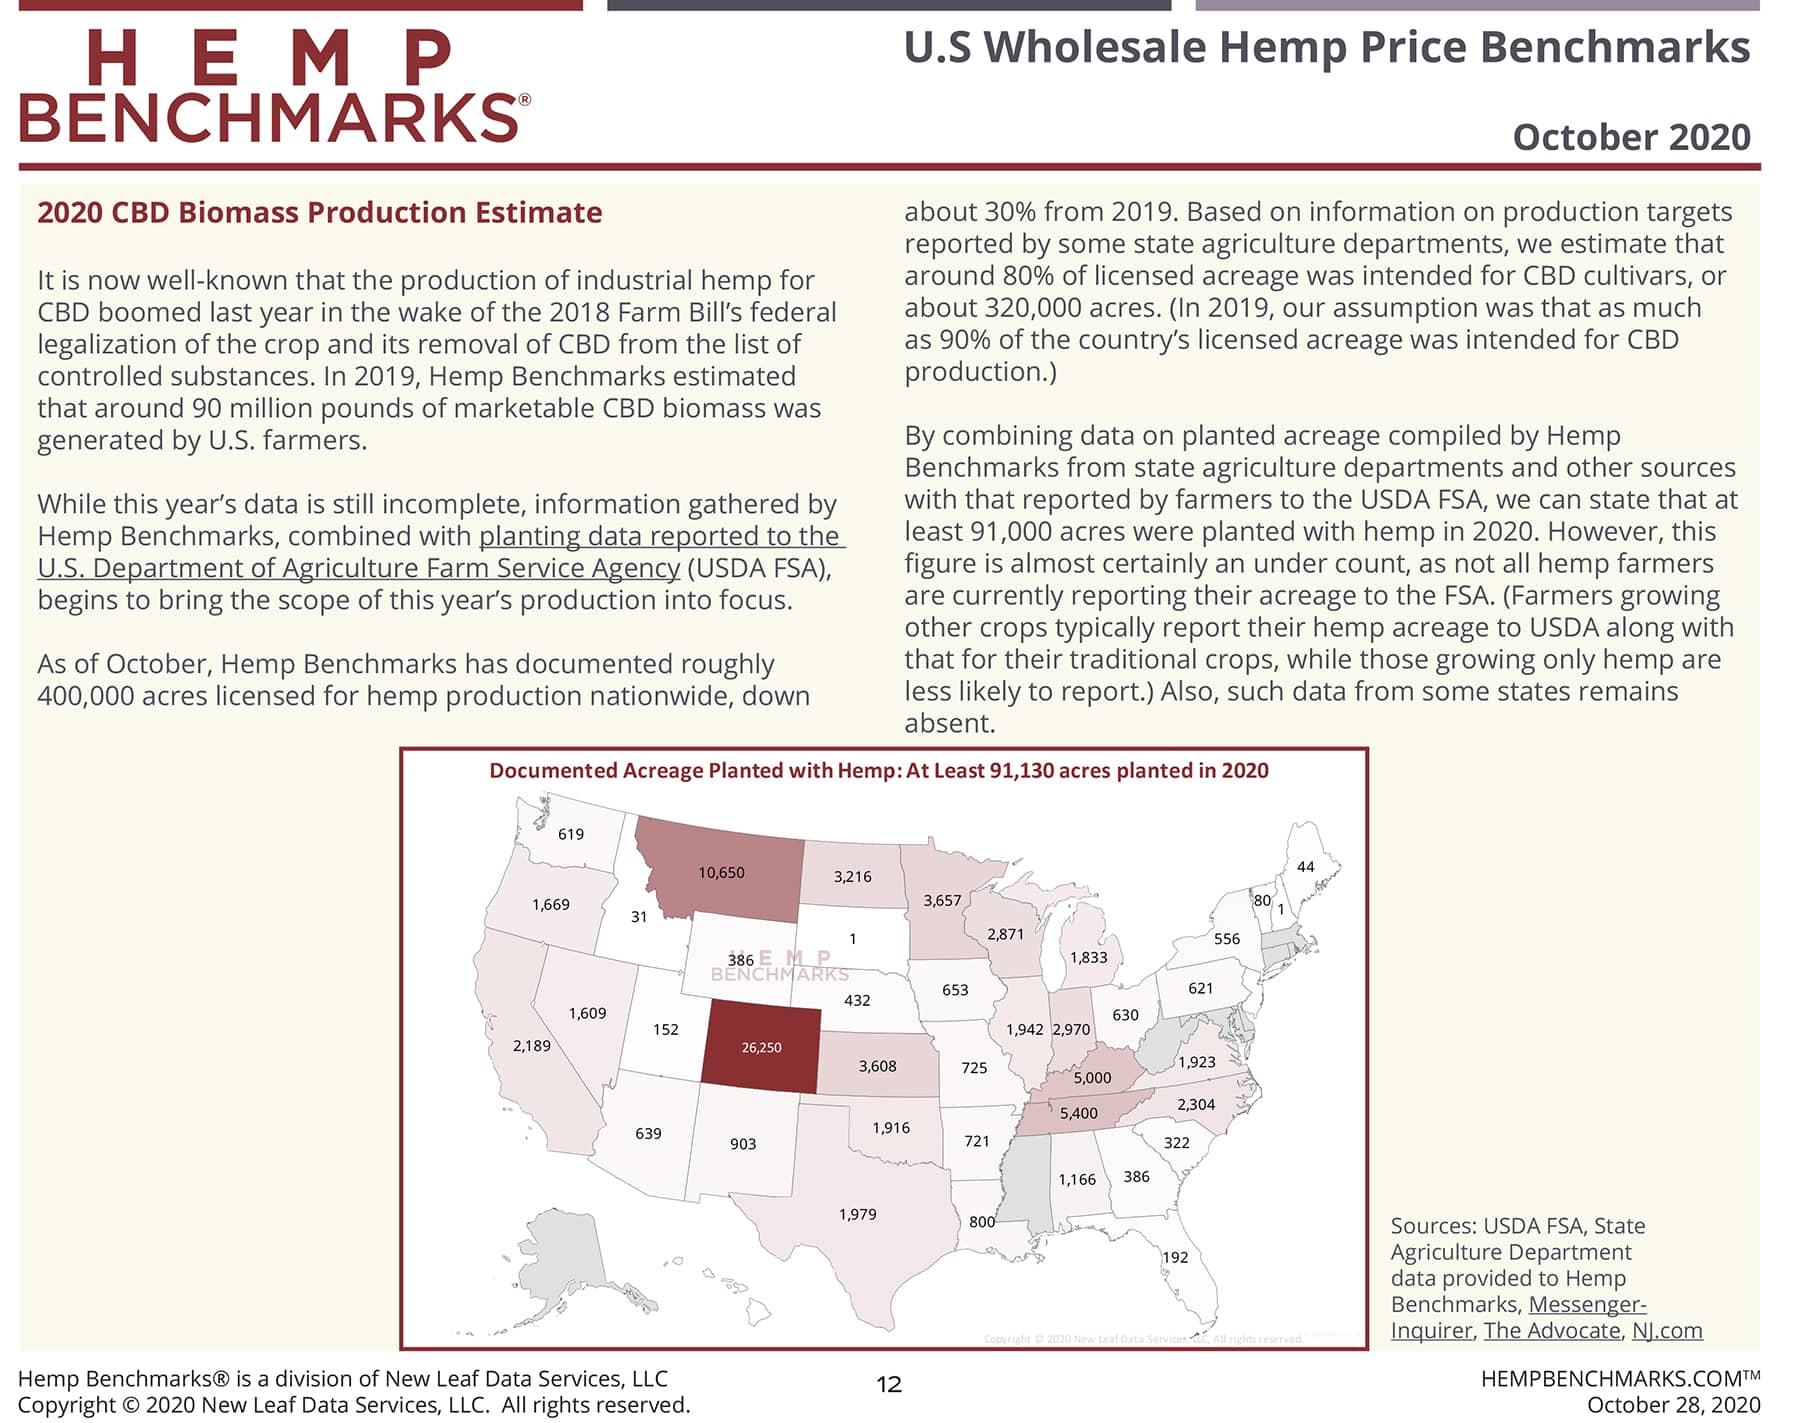 Hemp Benchmarks Spot Price Index Report